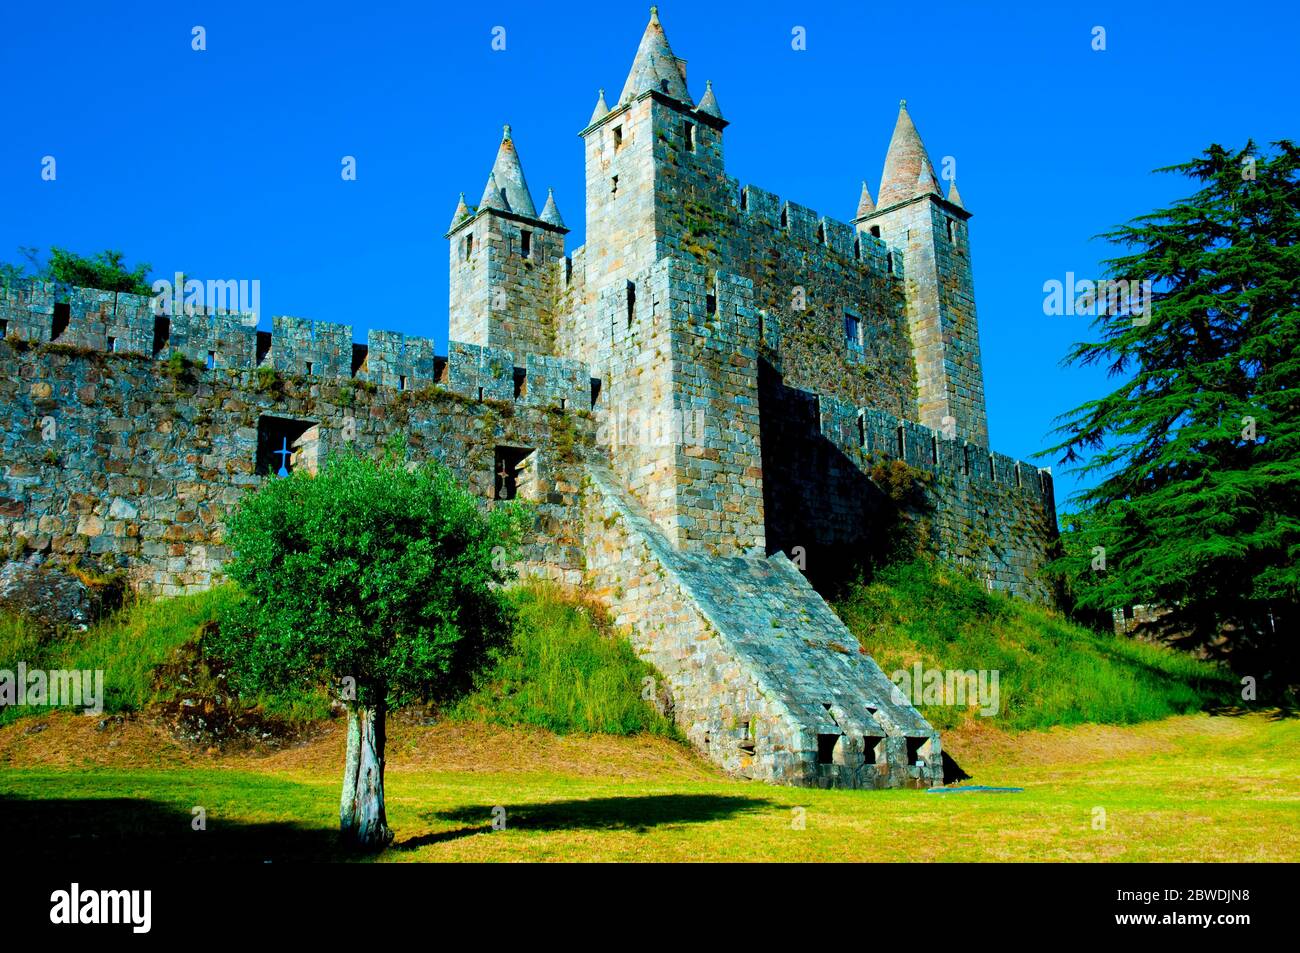 Castle of Santa Maria da Feira - Portugal Stock Photo